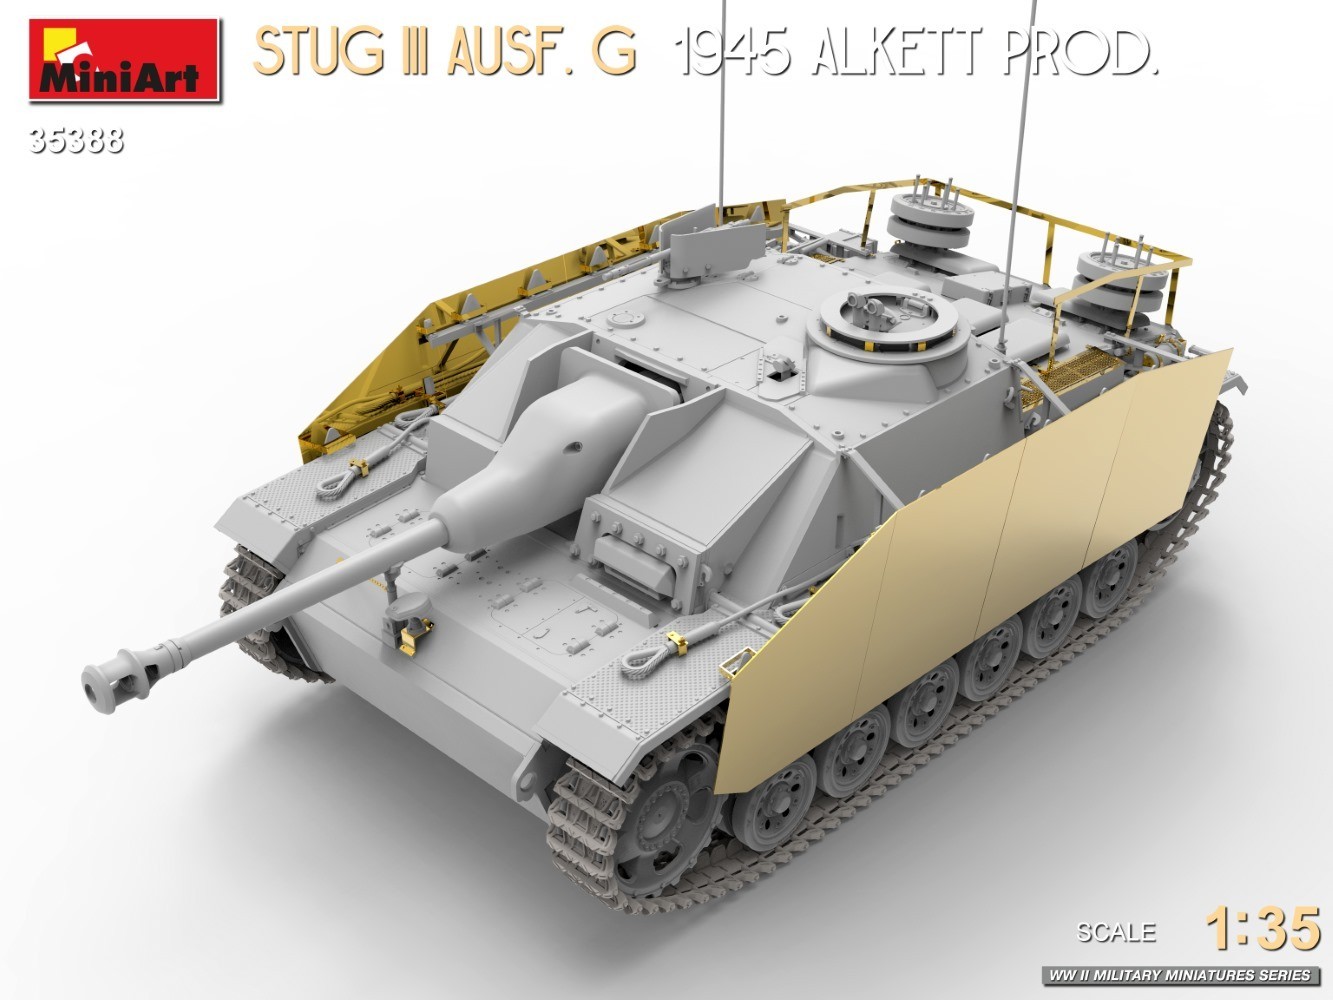 MiniArt to Release Highly Detailed 1/35 StuG III Ausf. G 1945 Alkett Prod. Model Kit CAD-1